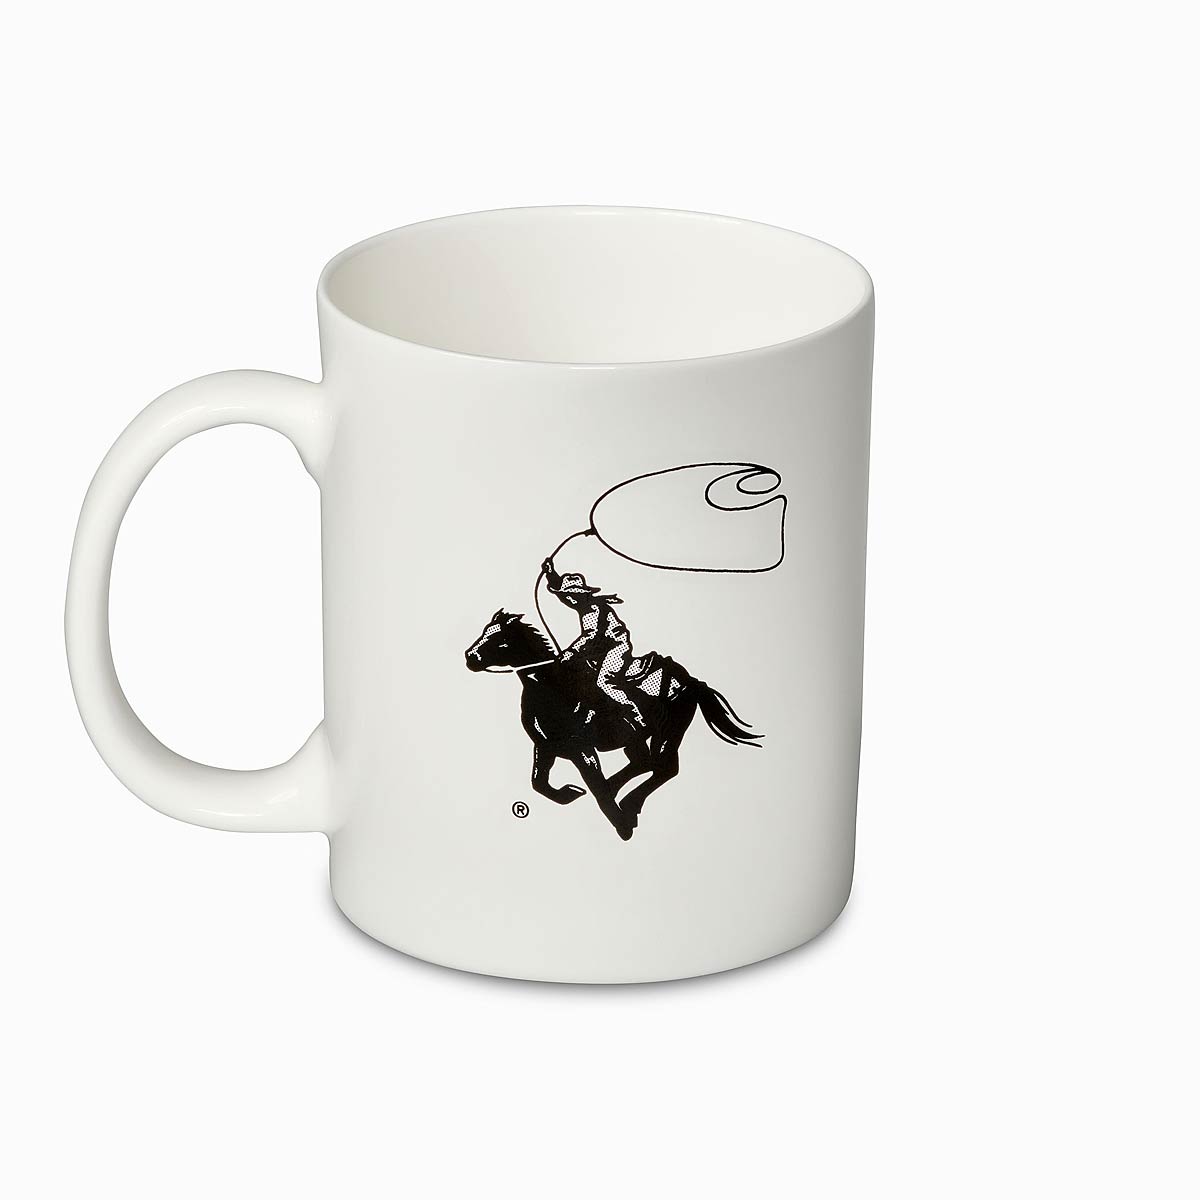 Carhartt Wip Lasso Mug, White / Black